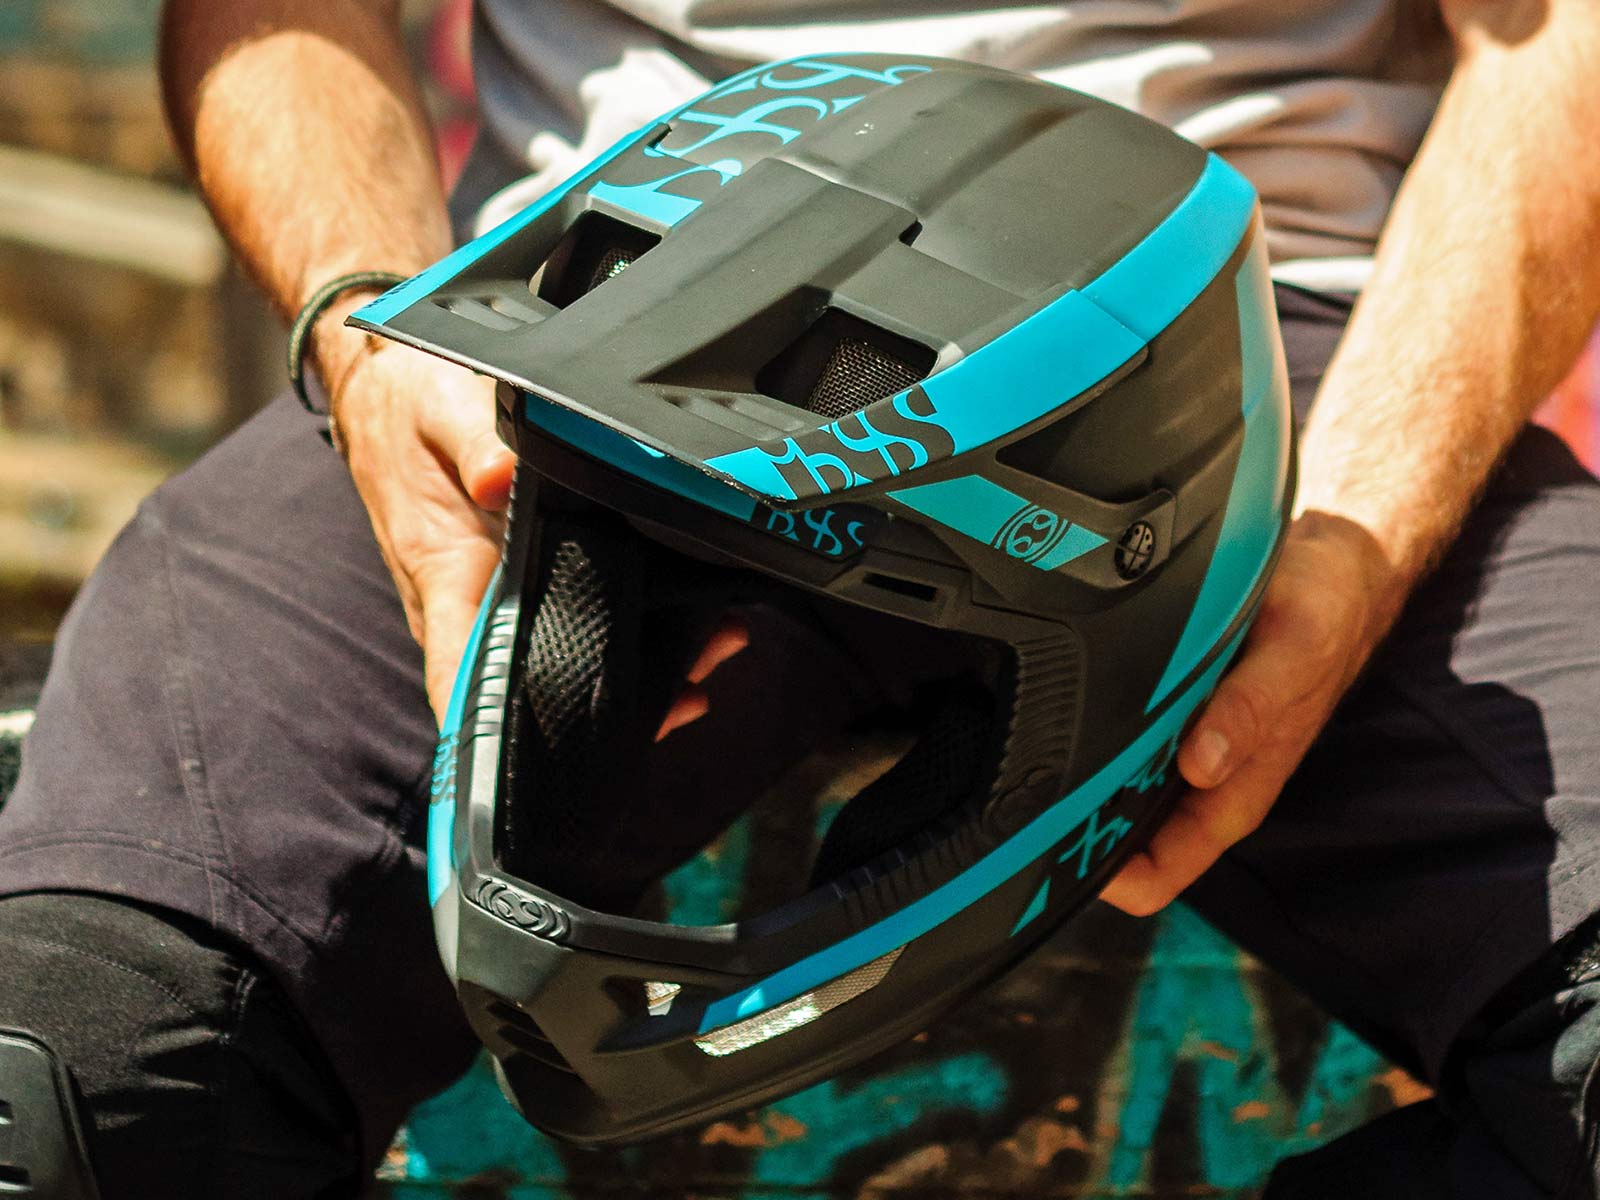 iXS Xult DH full face helmet, lightweight downhill race protection, front